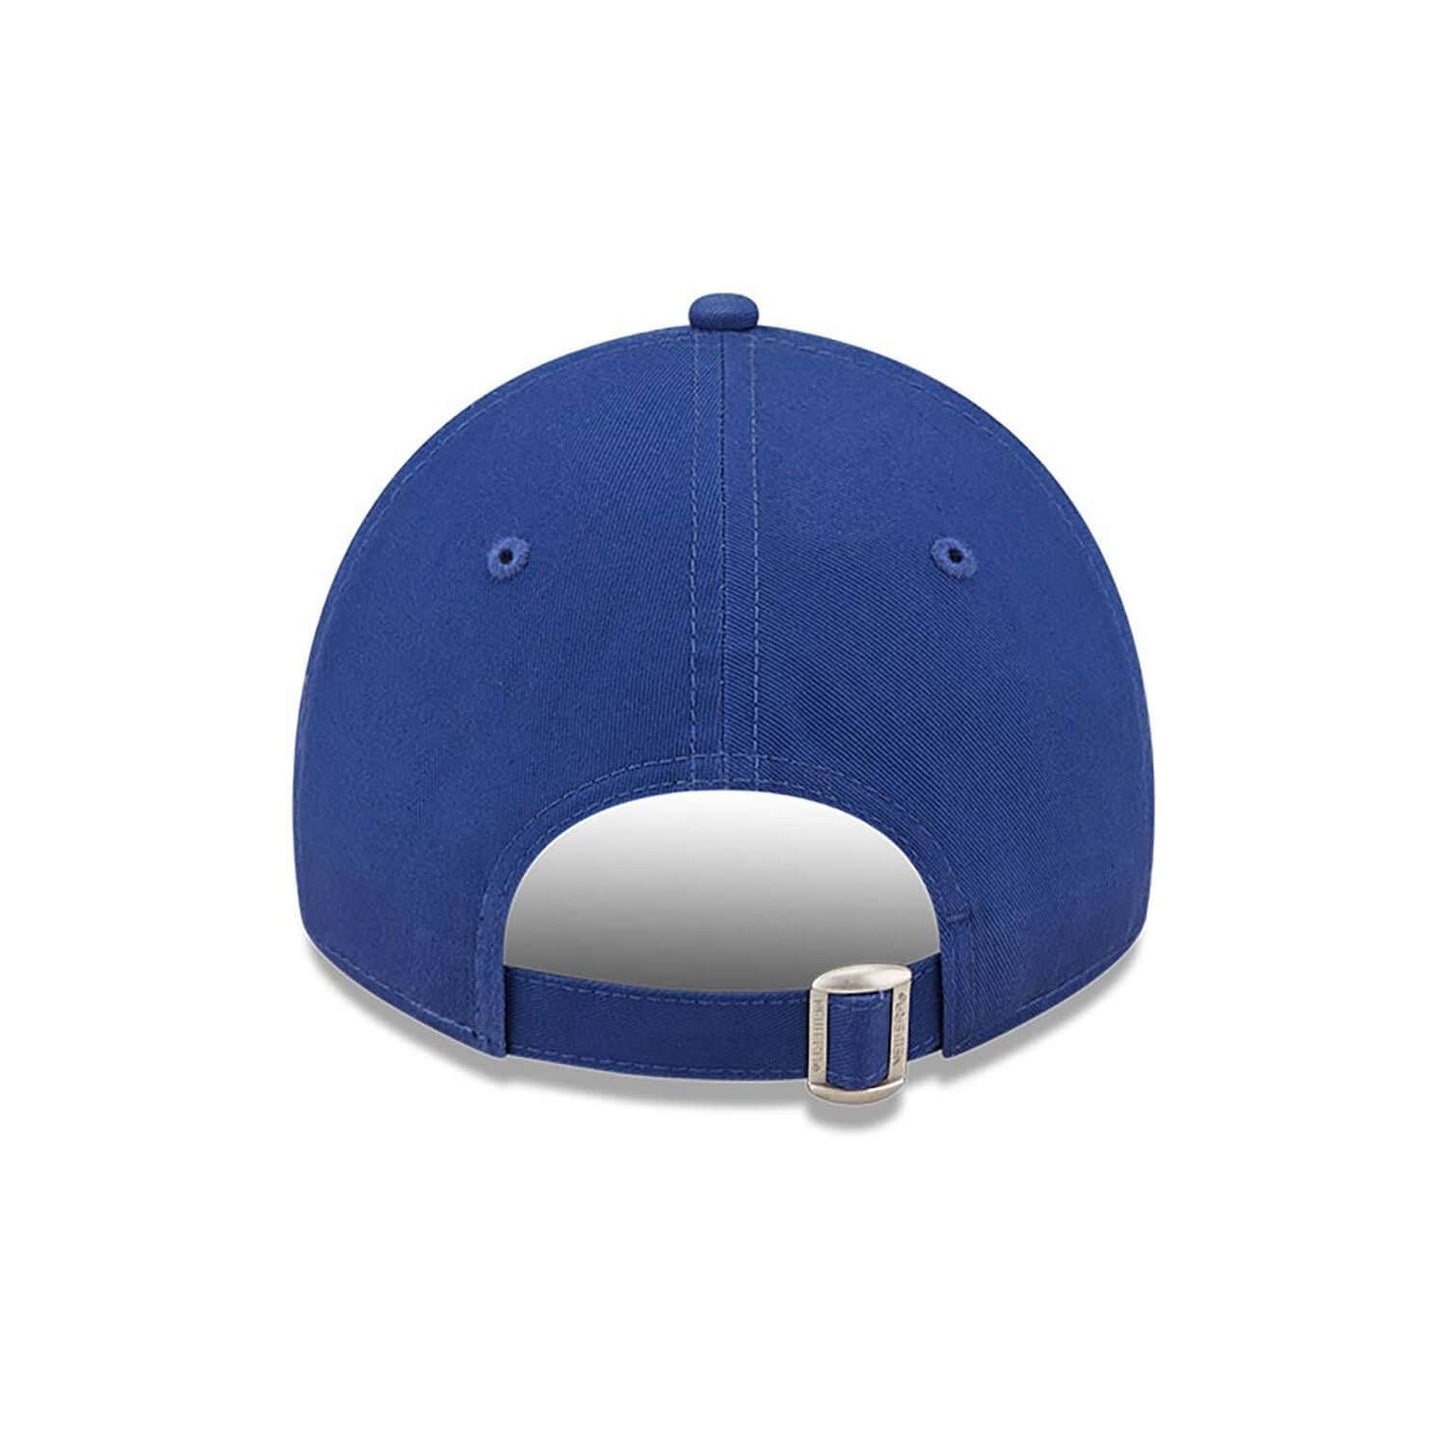 NEW ERA MLB New York Mets League Essential Blue 9TWENTY Adjustable Cap Blue